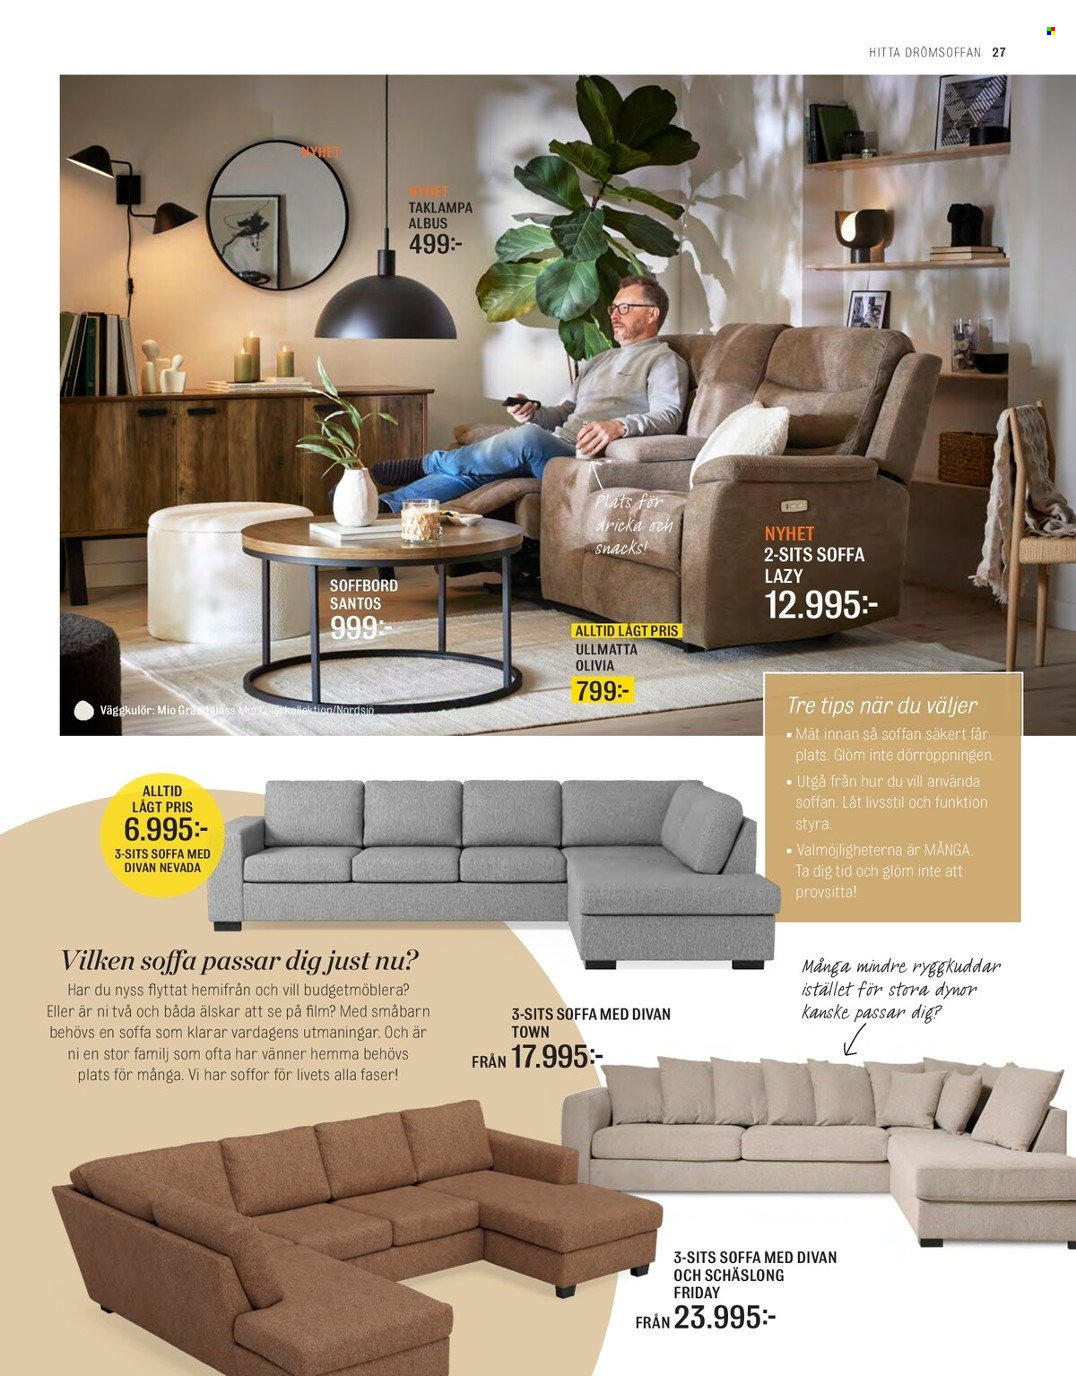 thumbnail - Mio reklamblad - varor från reklamblad - schäslong, 2-sits soffa, 3-sits soffa, soffa, soffbord, lampa, taklampa. Sida 27.